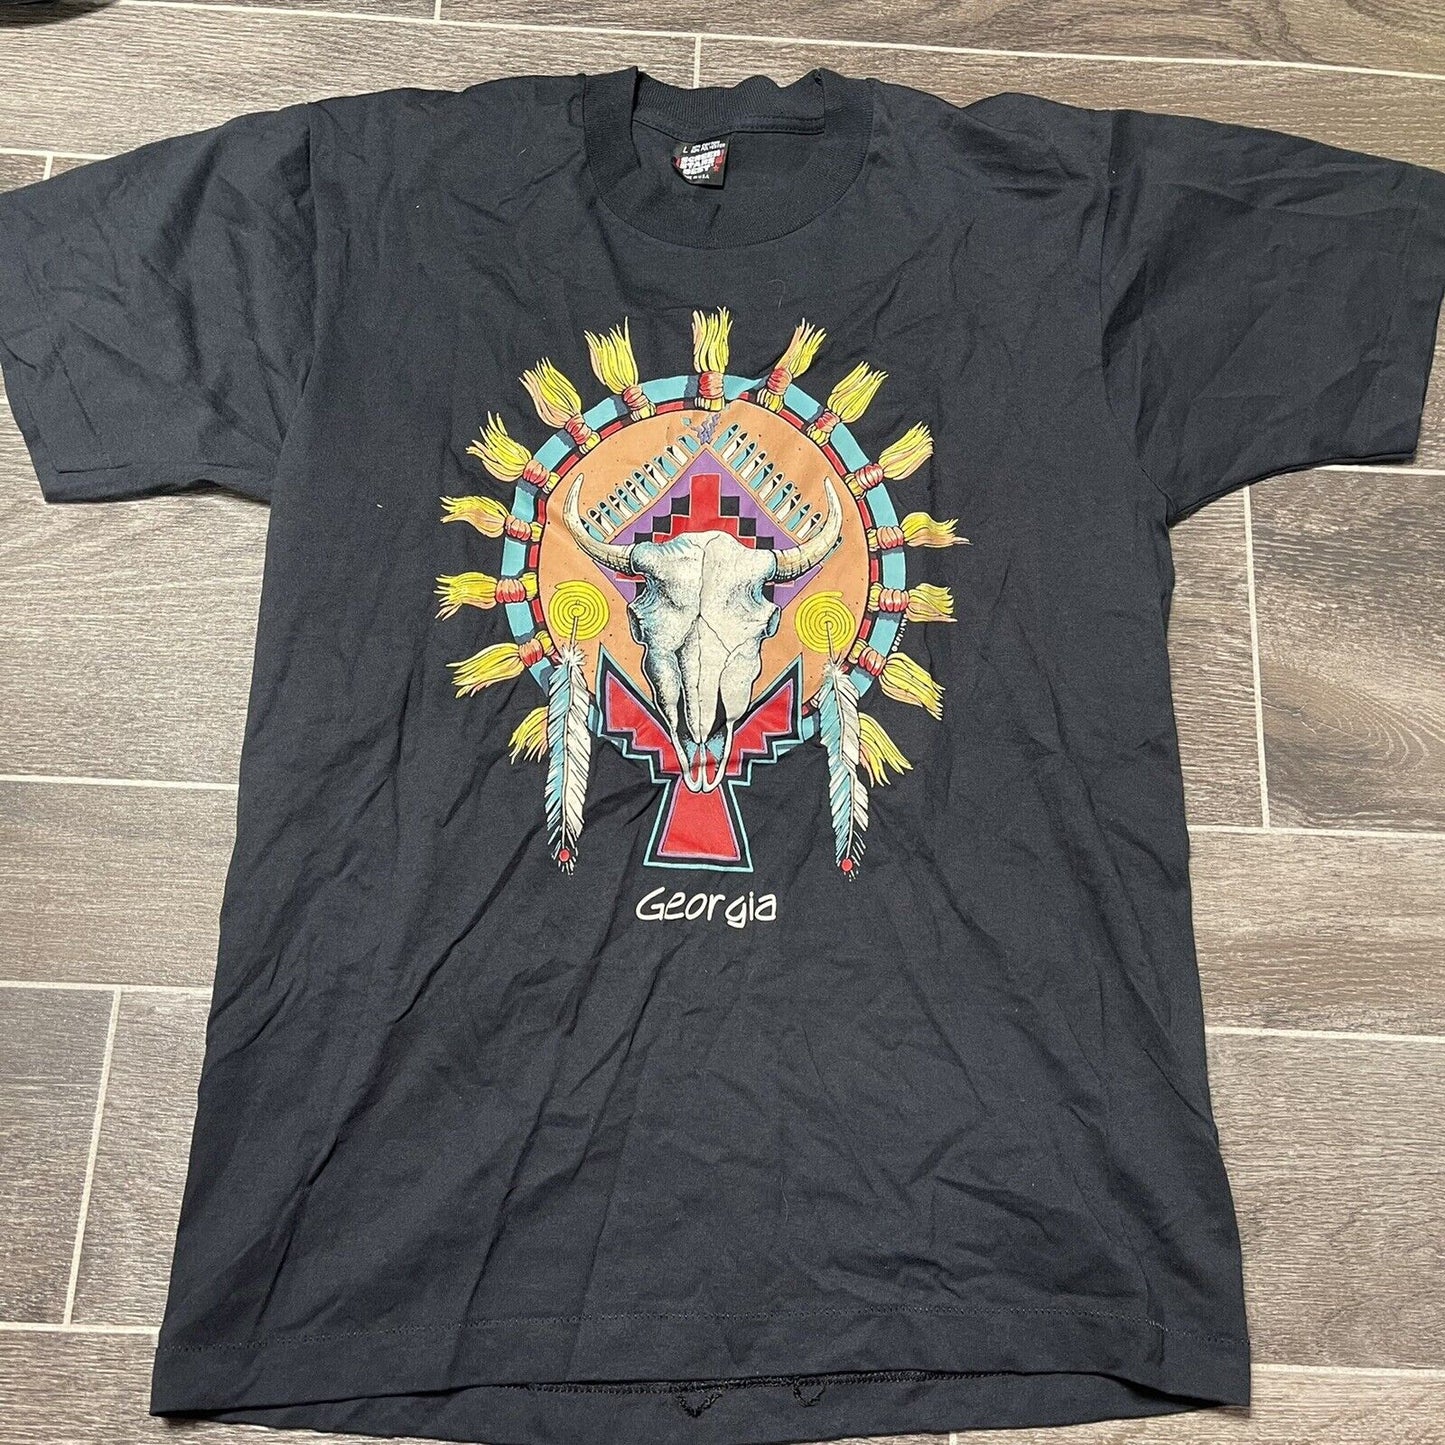 vintage georgia indian t shirt size large Native American